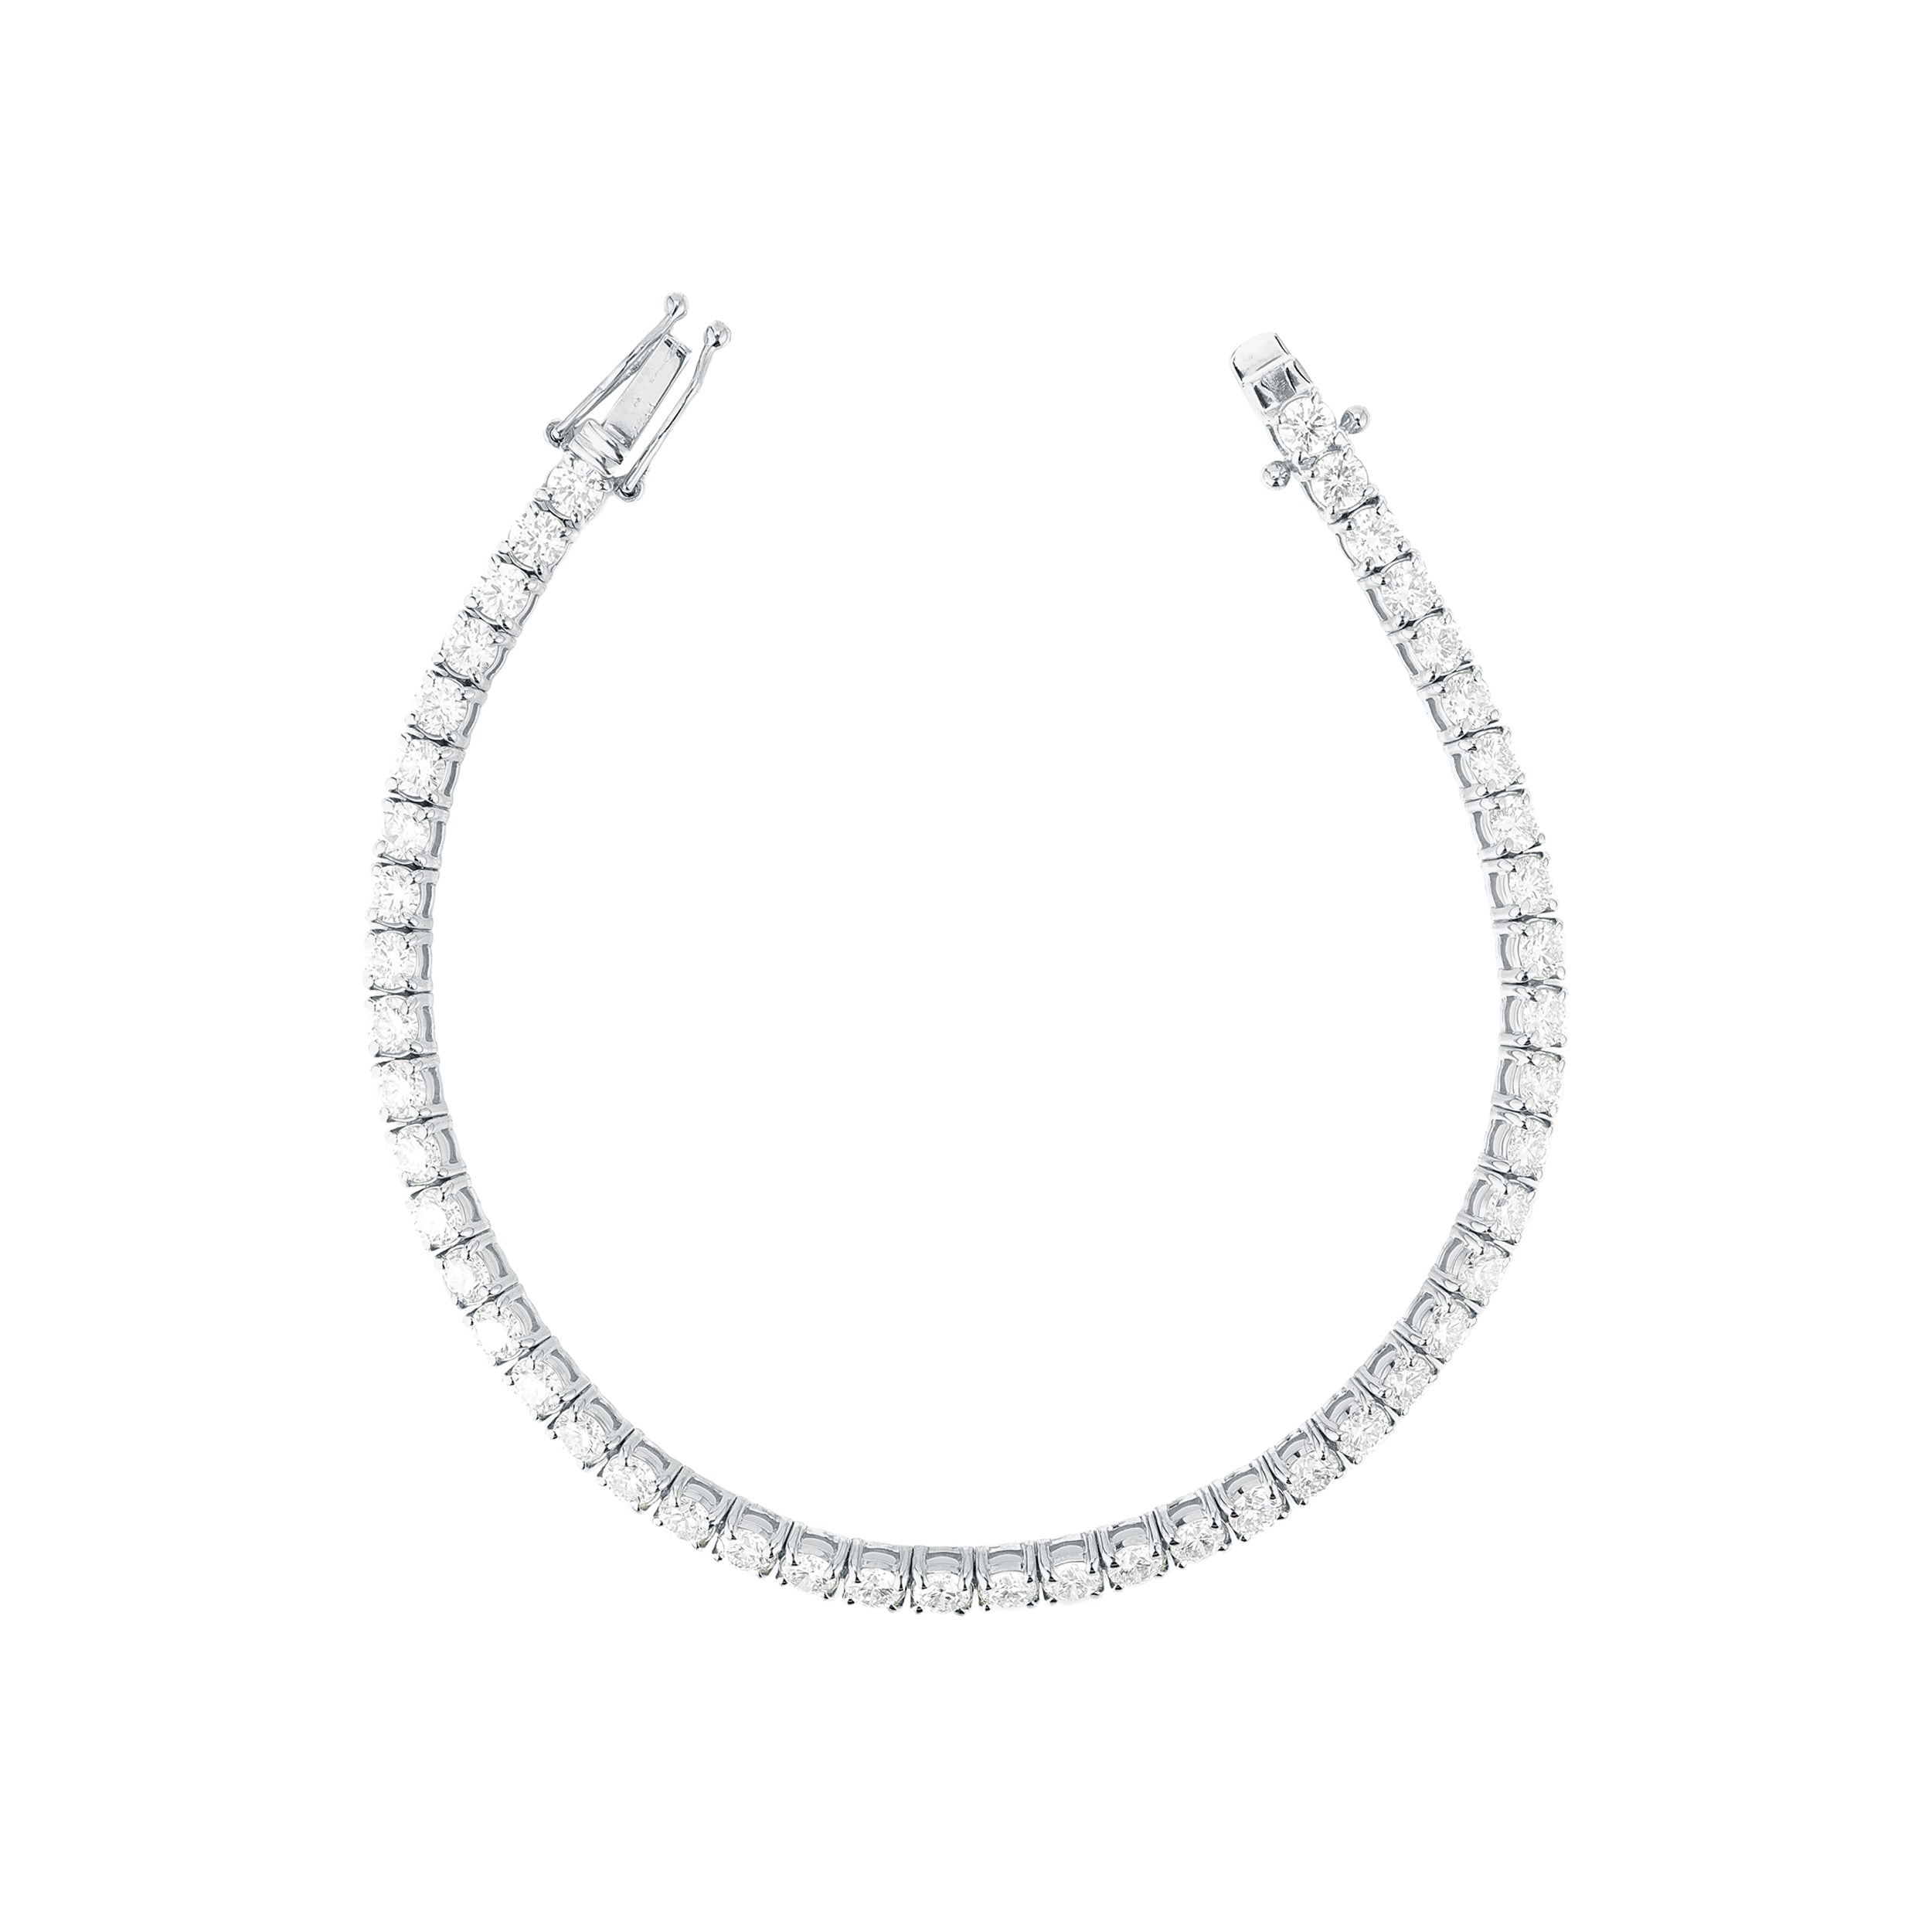 Shop 5.15 Carat White Gold Diamond Tennis Bracelet for Valentine's Day